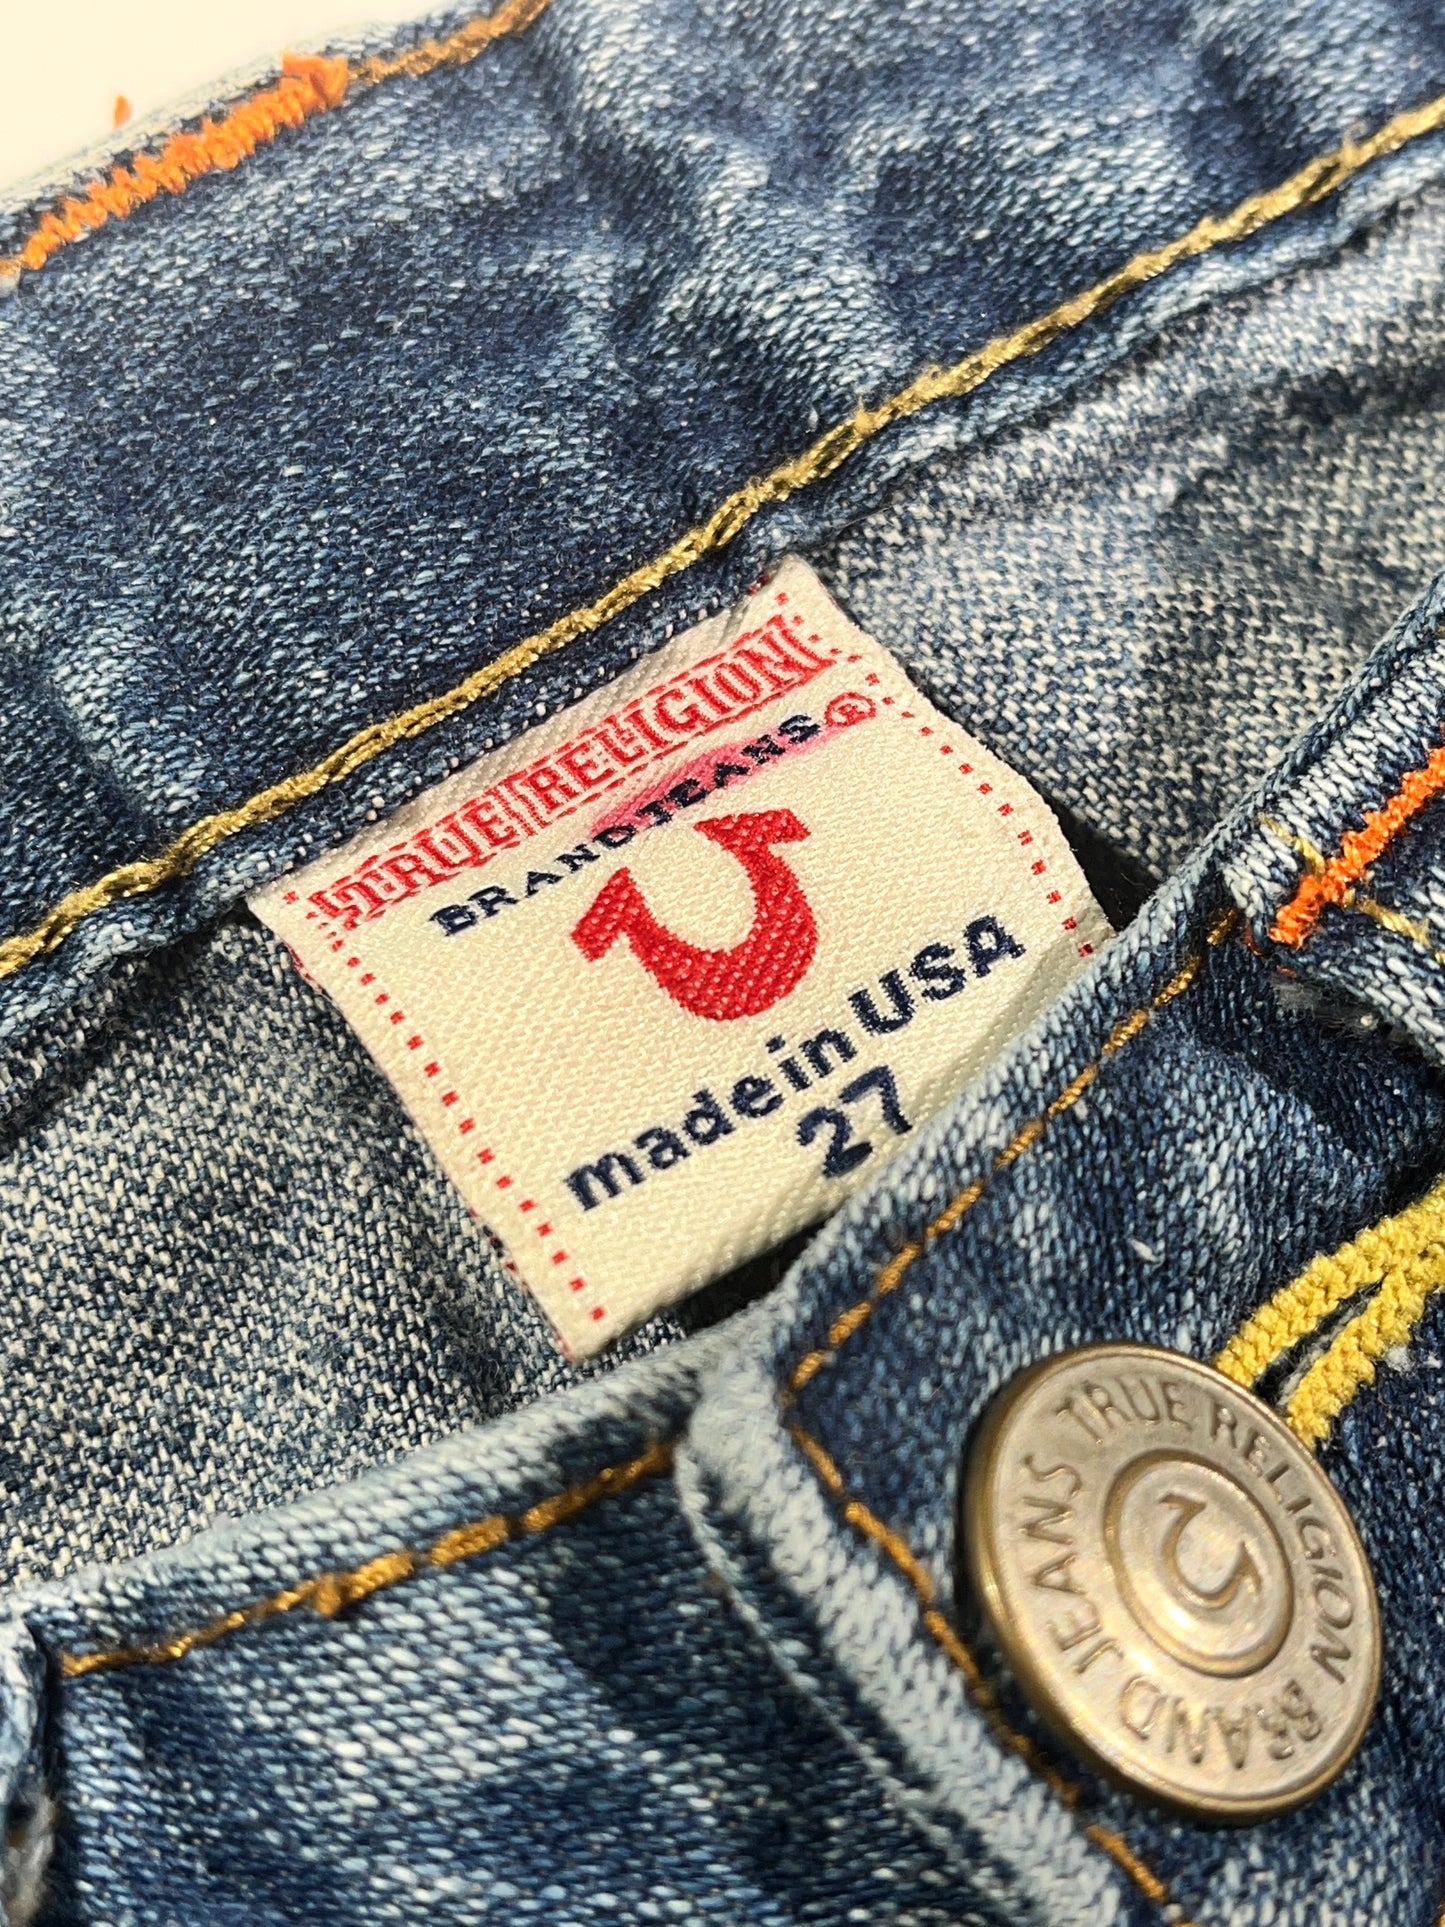 Vintage True Religion Jeans Denim Pants BOBBY USA Made FLARE